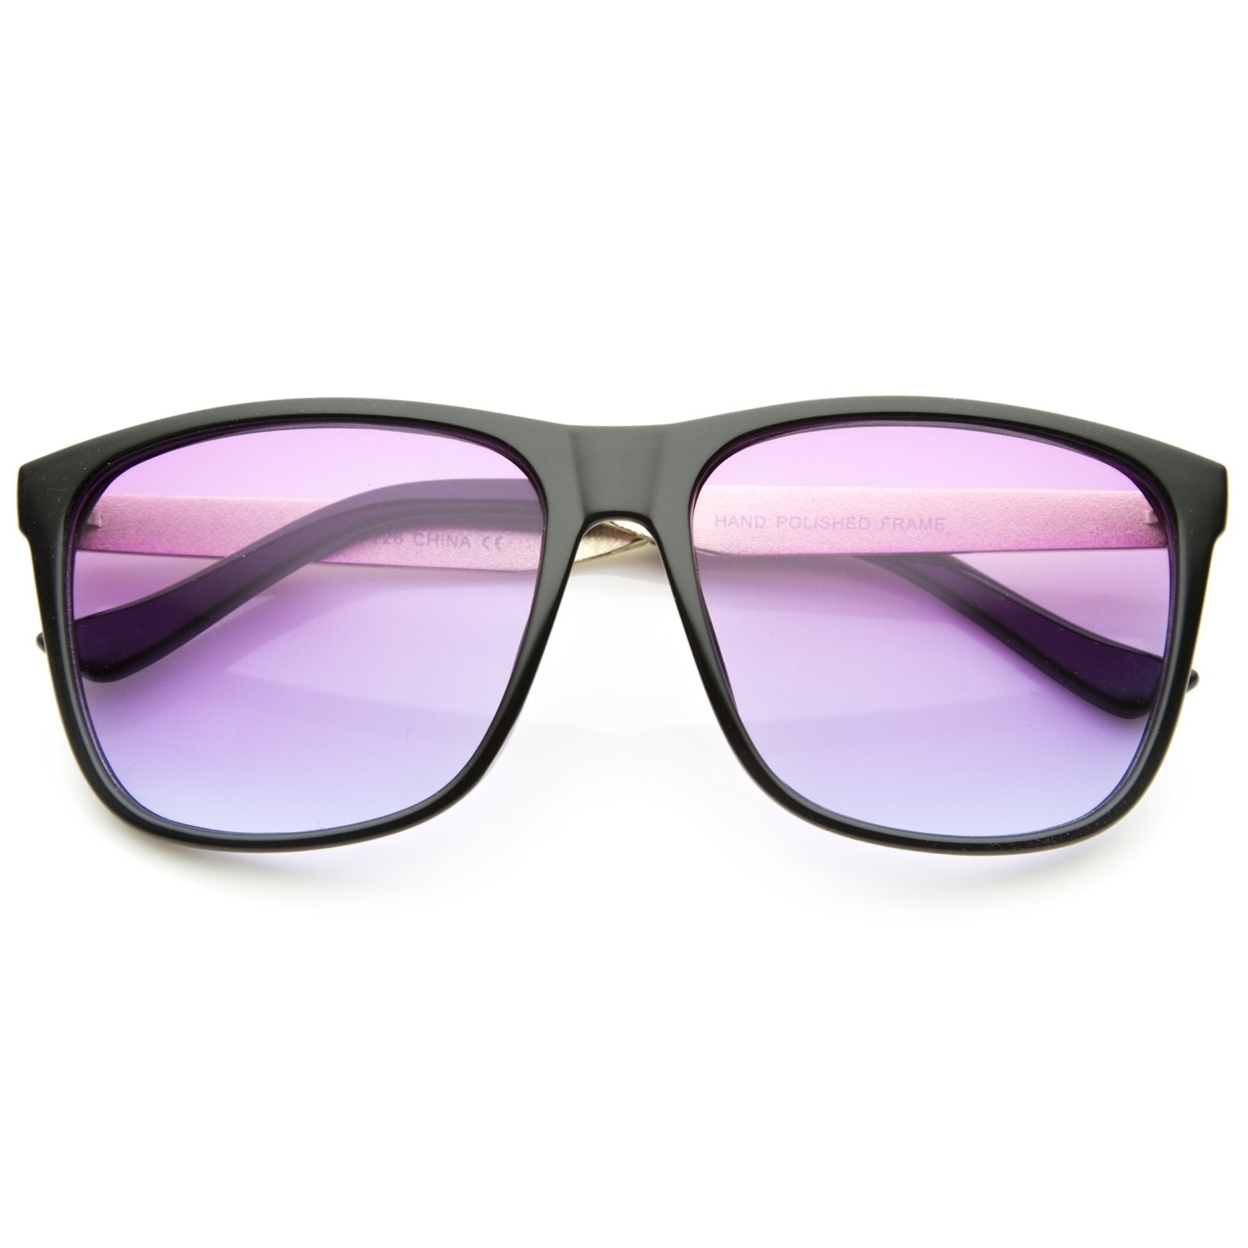 Modern Horn Rimmed Gradient Colored Lens Metal Temple Square Sunglasses 56mm - Black / Pink